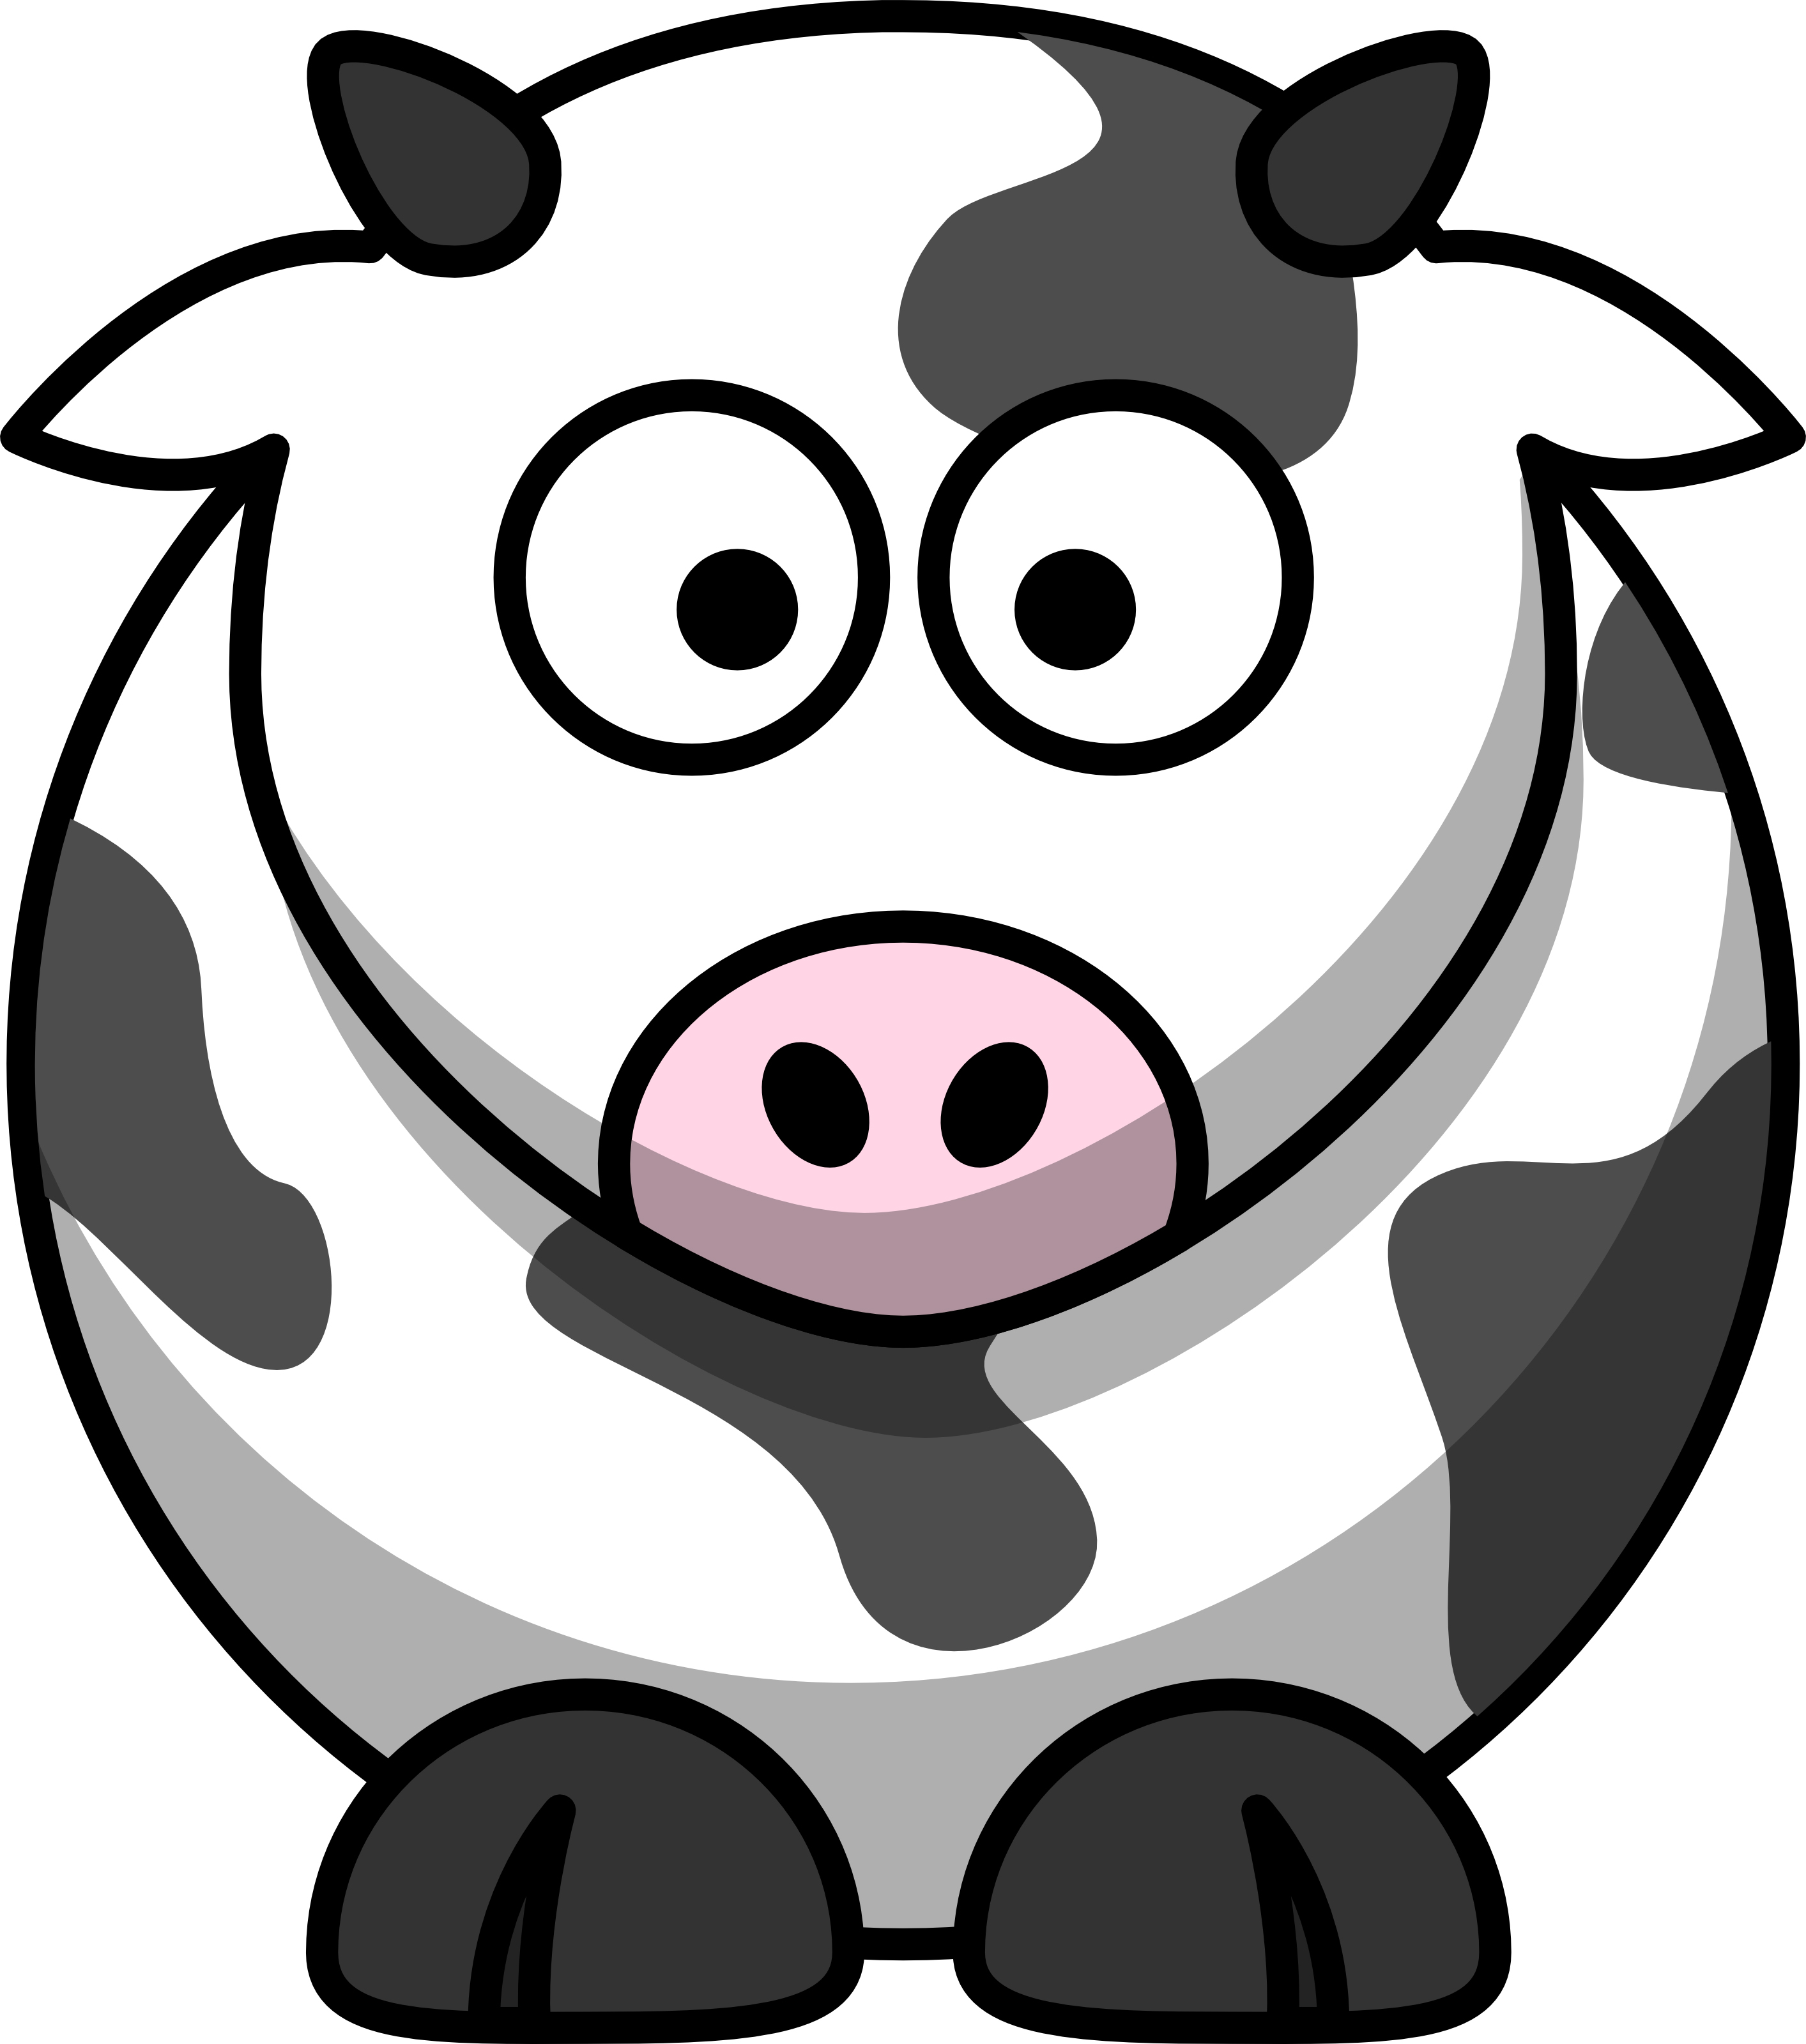 Free Cartoon Cow Clip Art image - vector clip art online, royalty ...